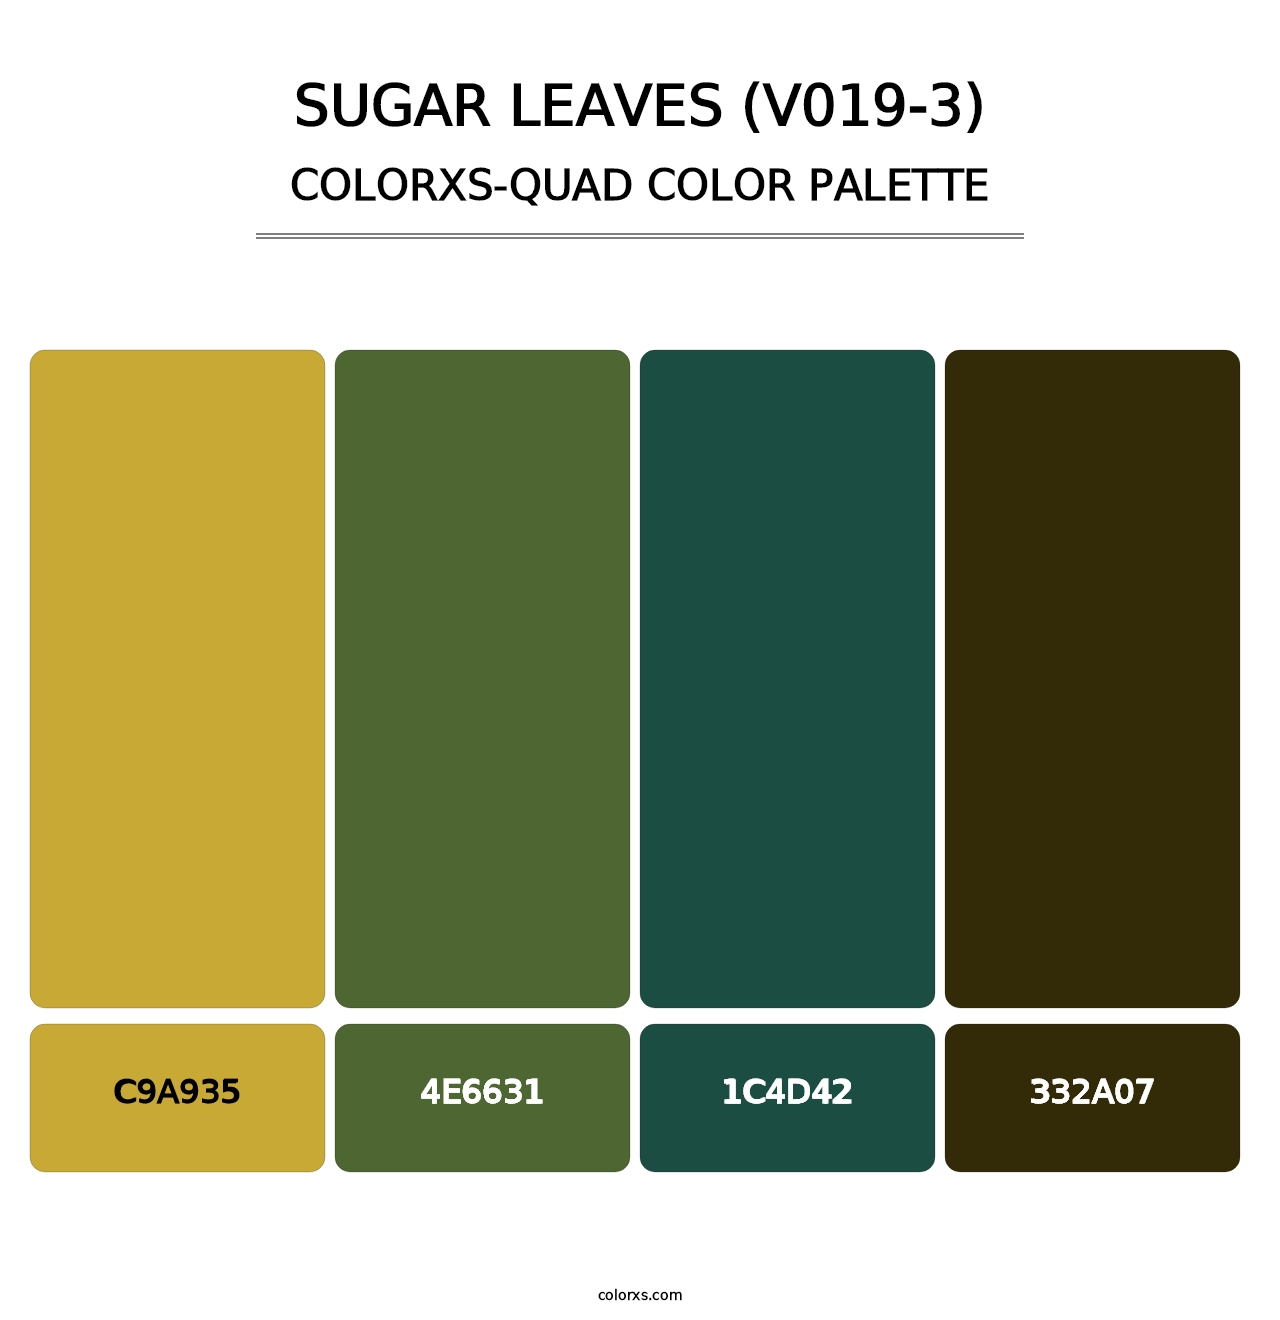 Sugar Leaves (V019-3) - Colorxs Quad Palette